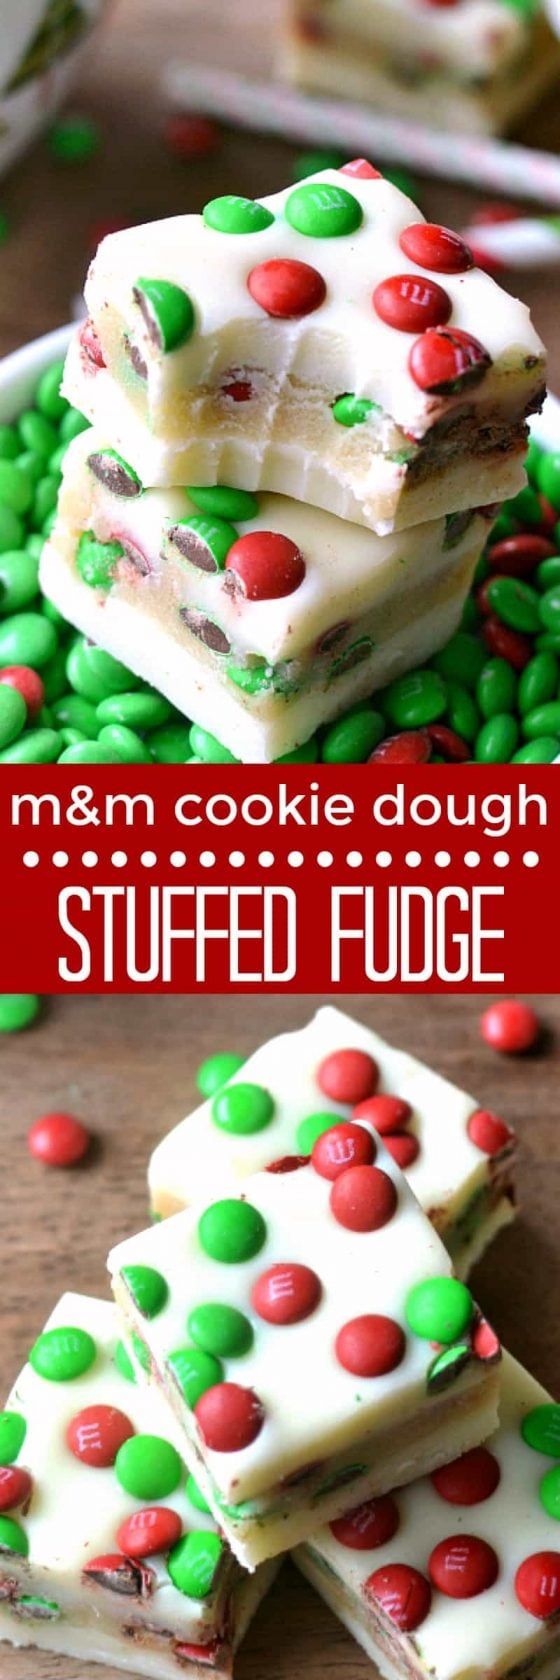 M&M Cookie Dough Stuffed Fudge - The BEST Holiday Fudge Recipes!